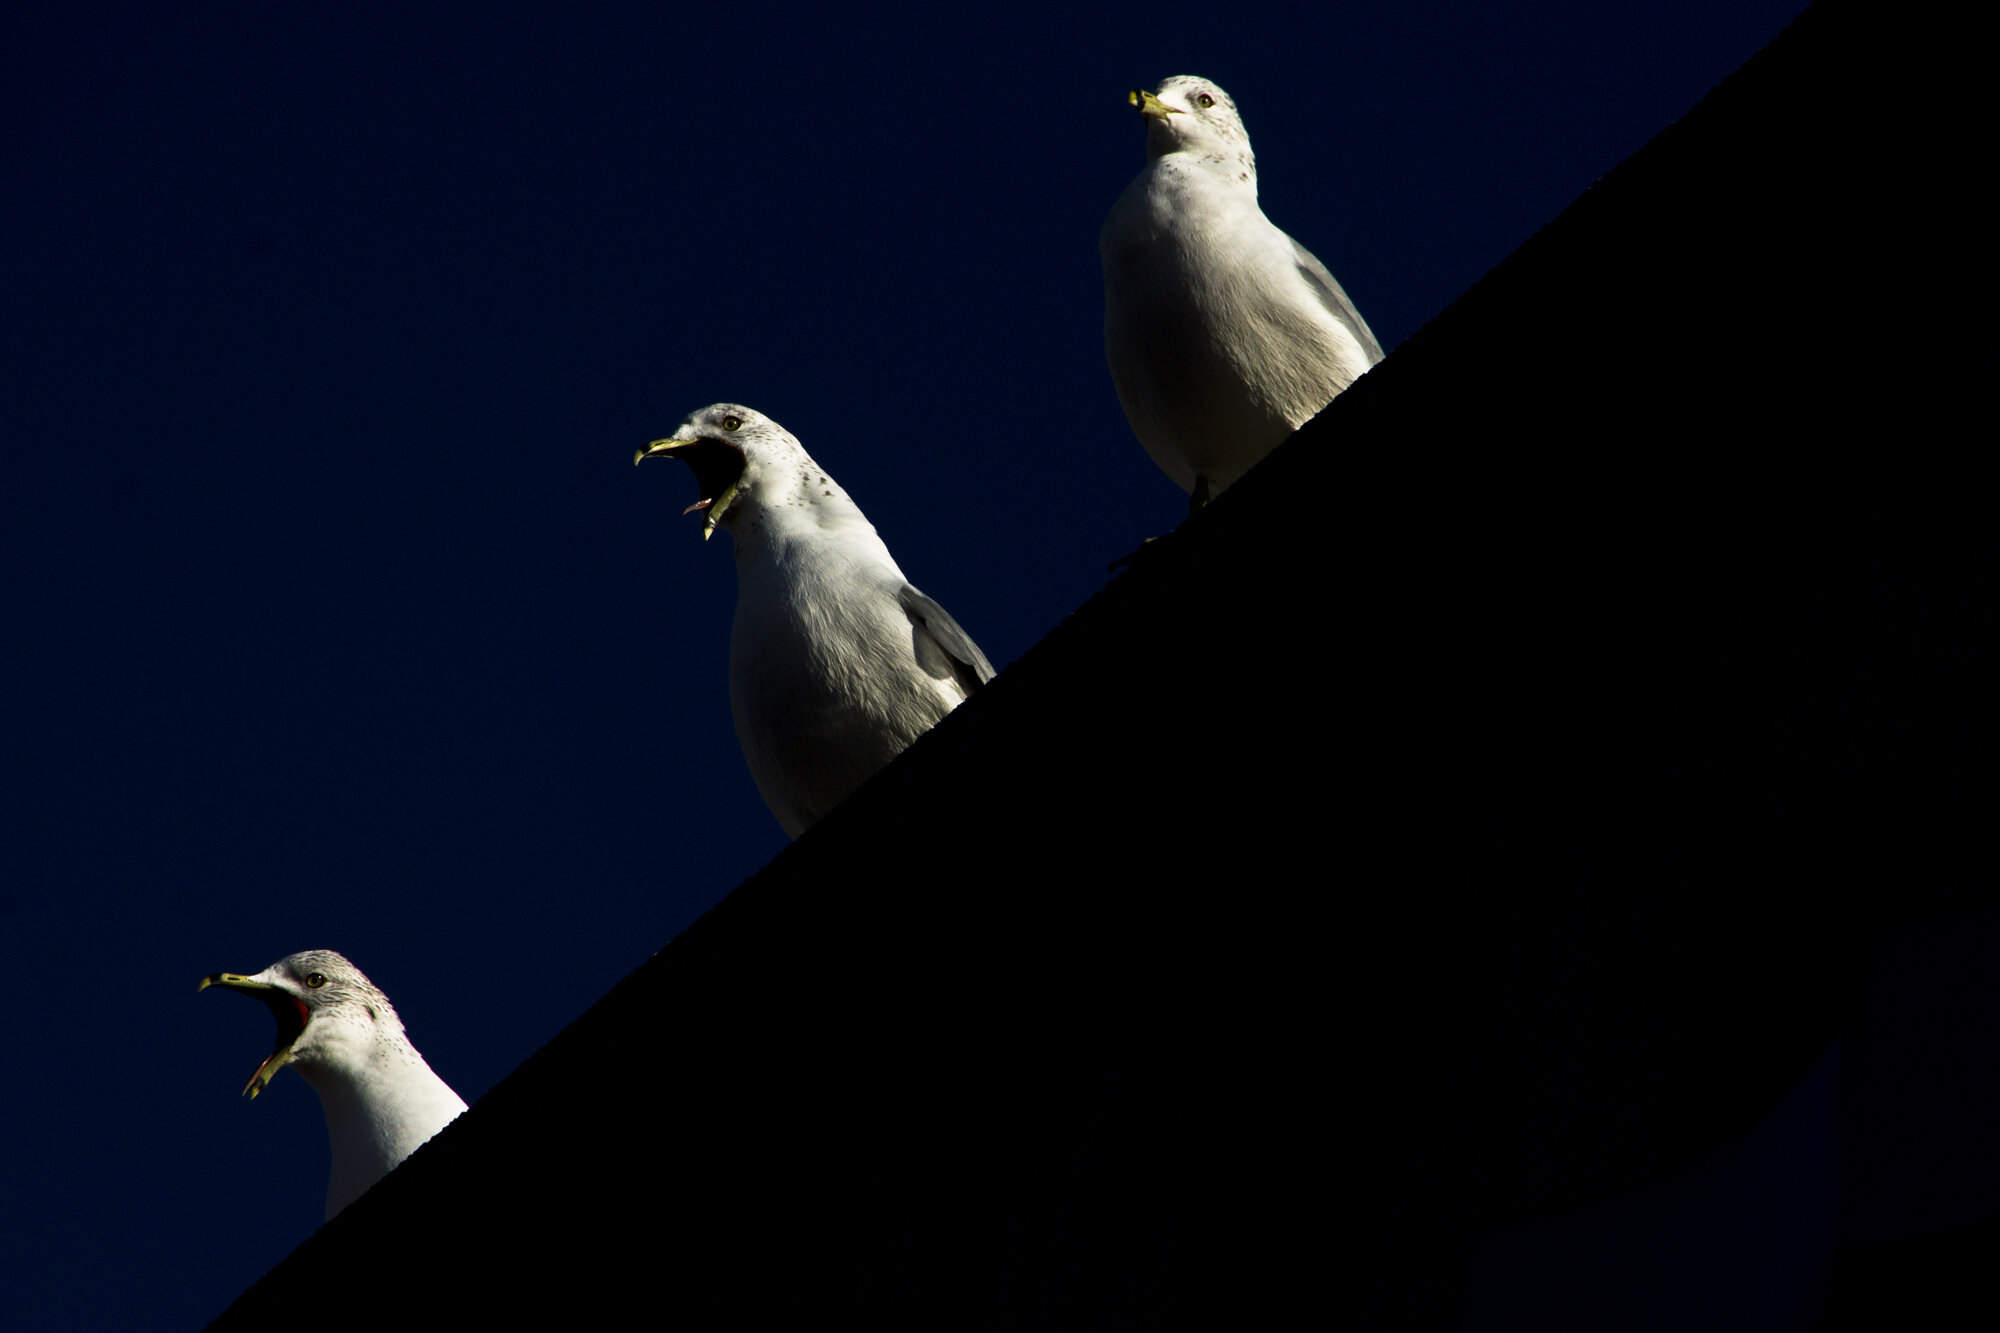 Three Seagulls on a Ledge